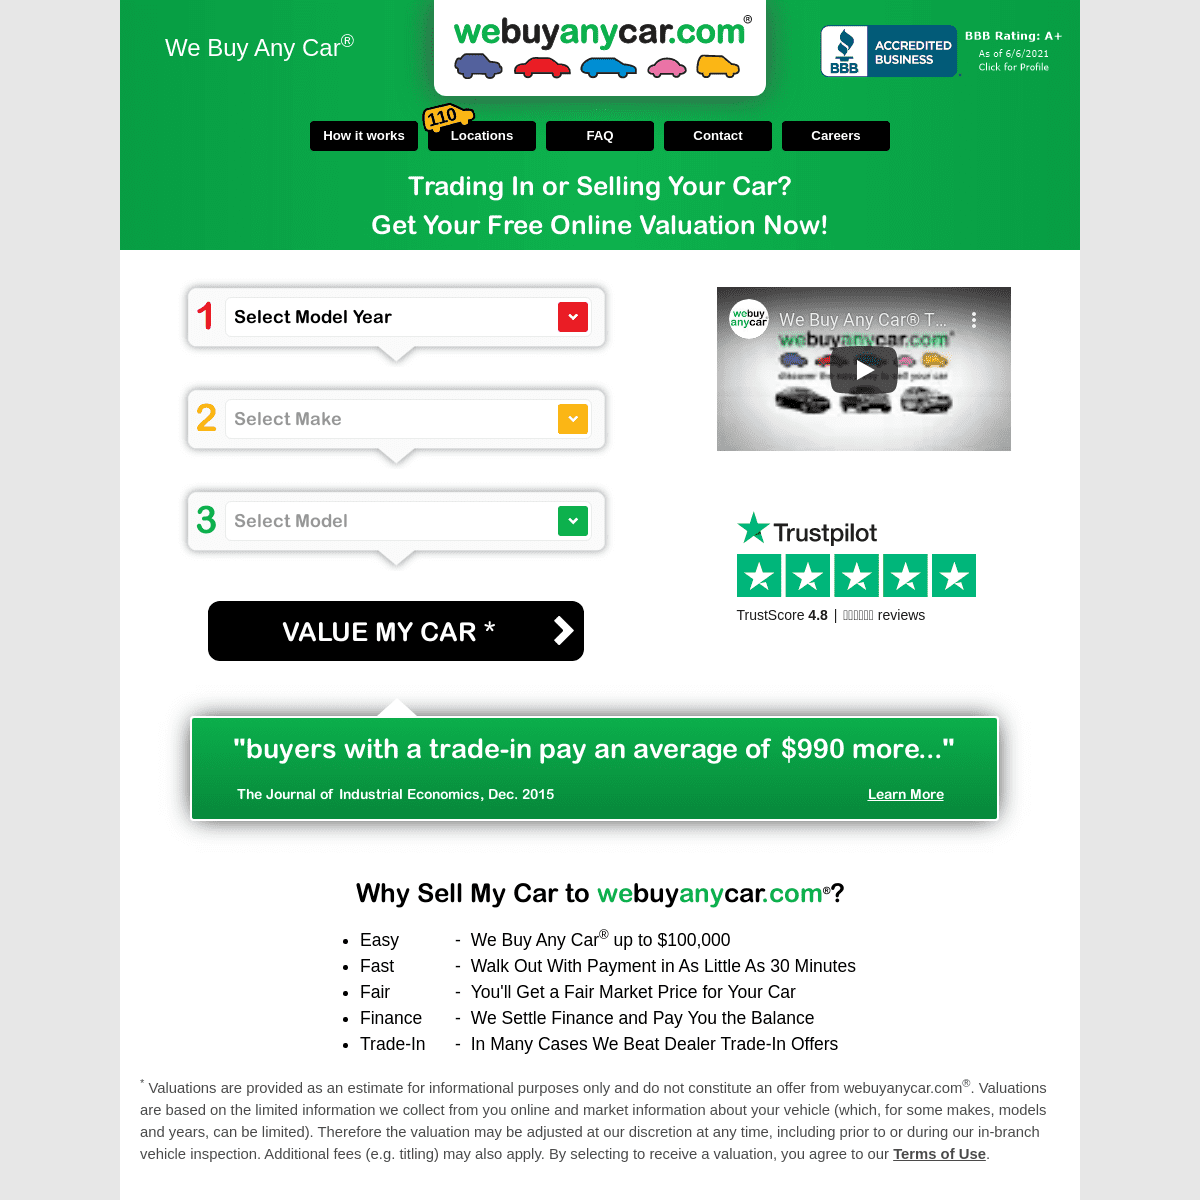 A complete backup of https://webuyanycar.com